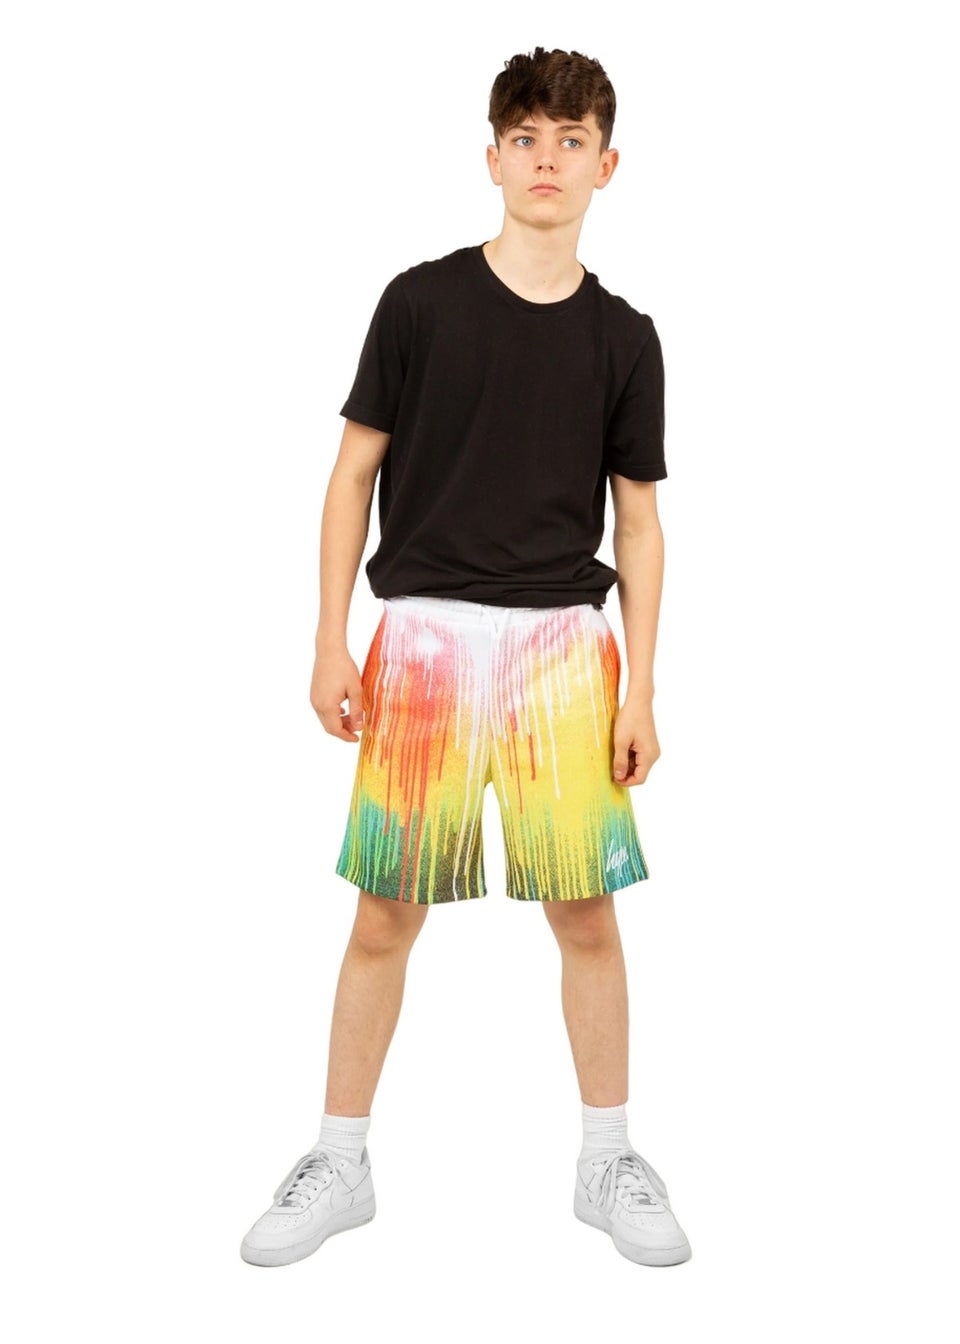 Hype Boys Multi Bright Drip Shorts (3-16yrs)